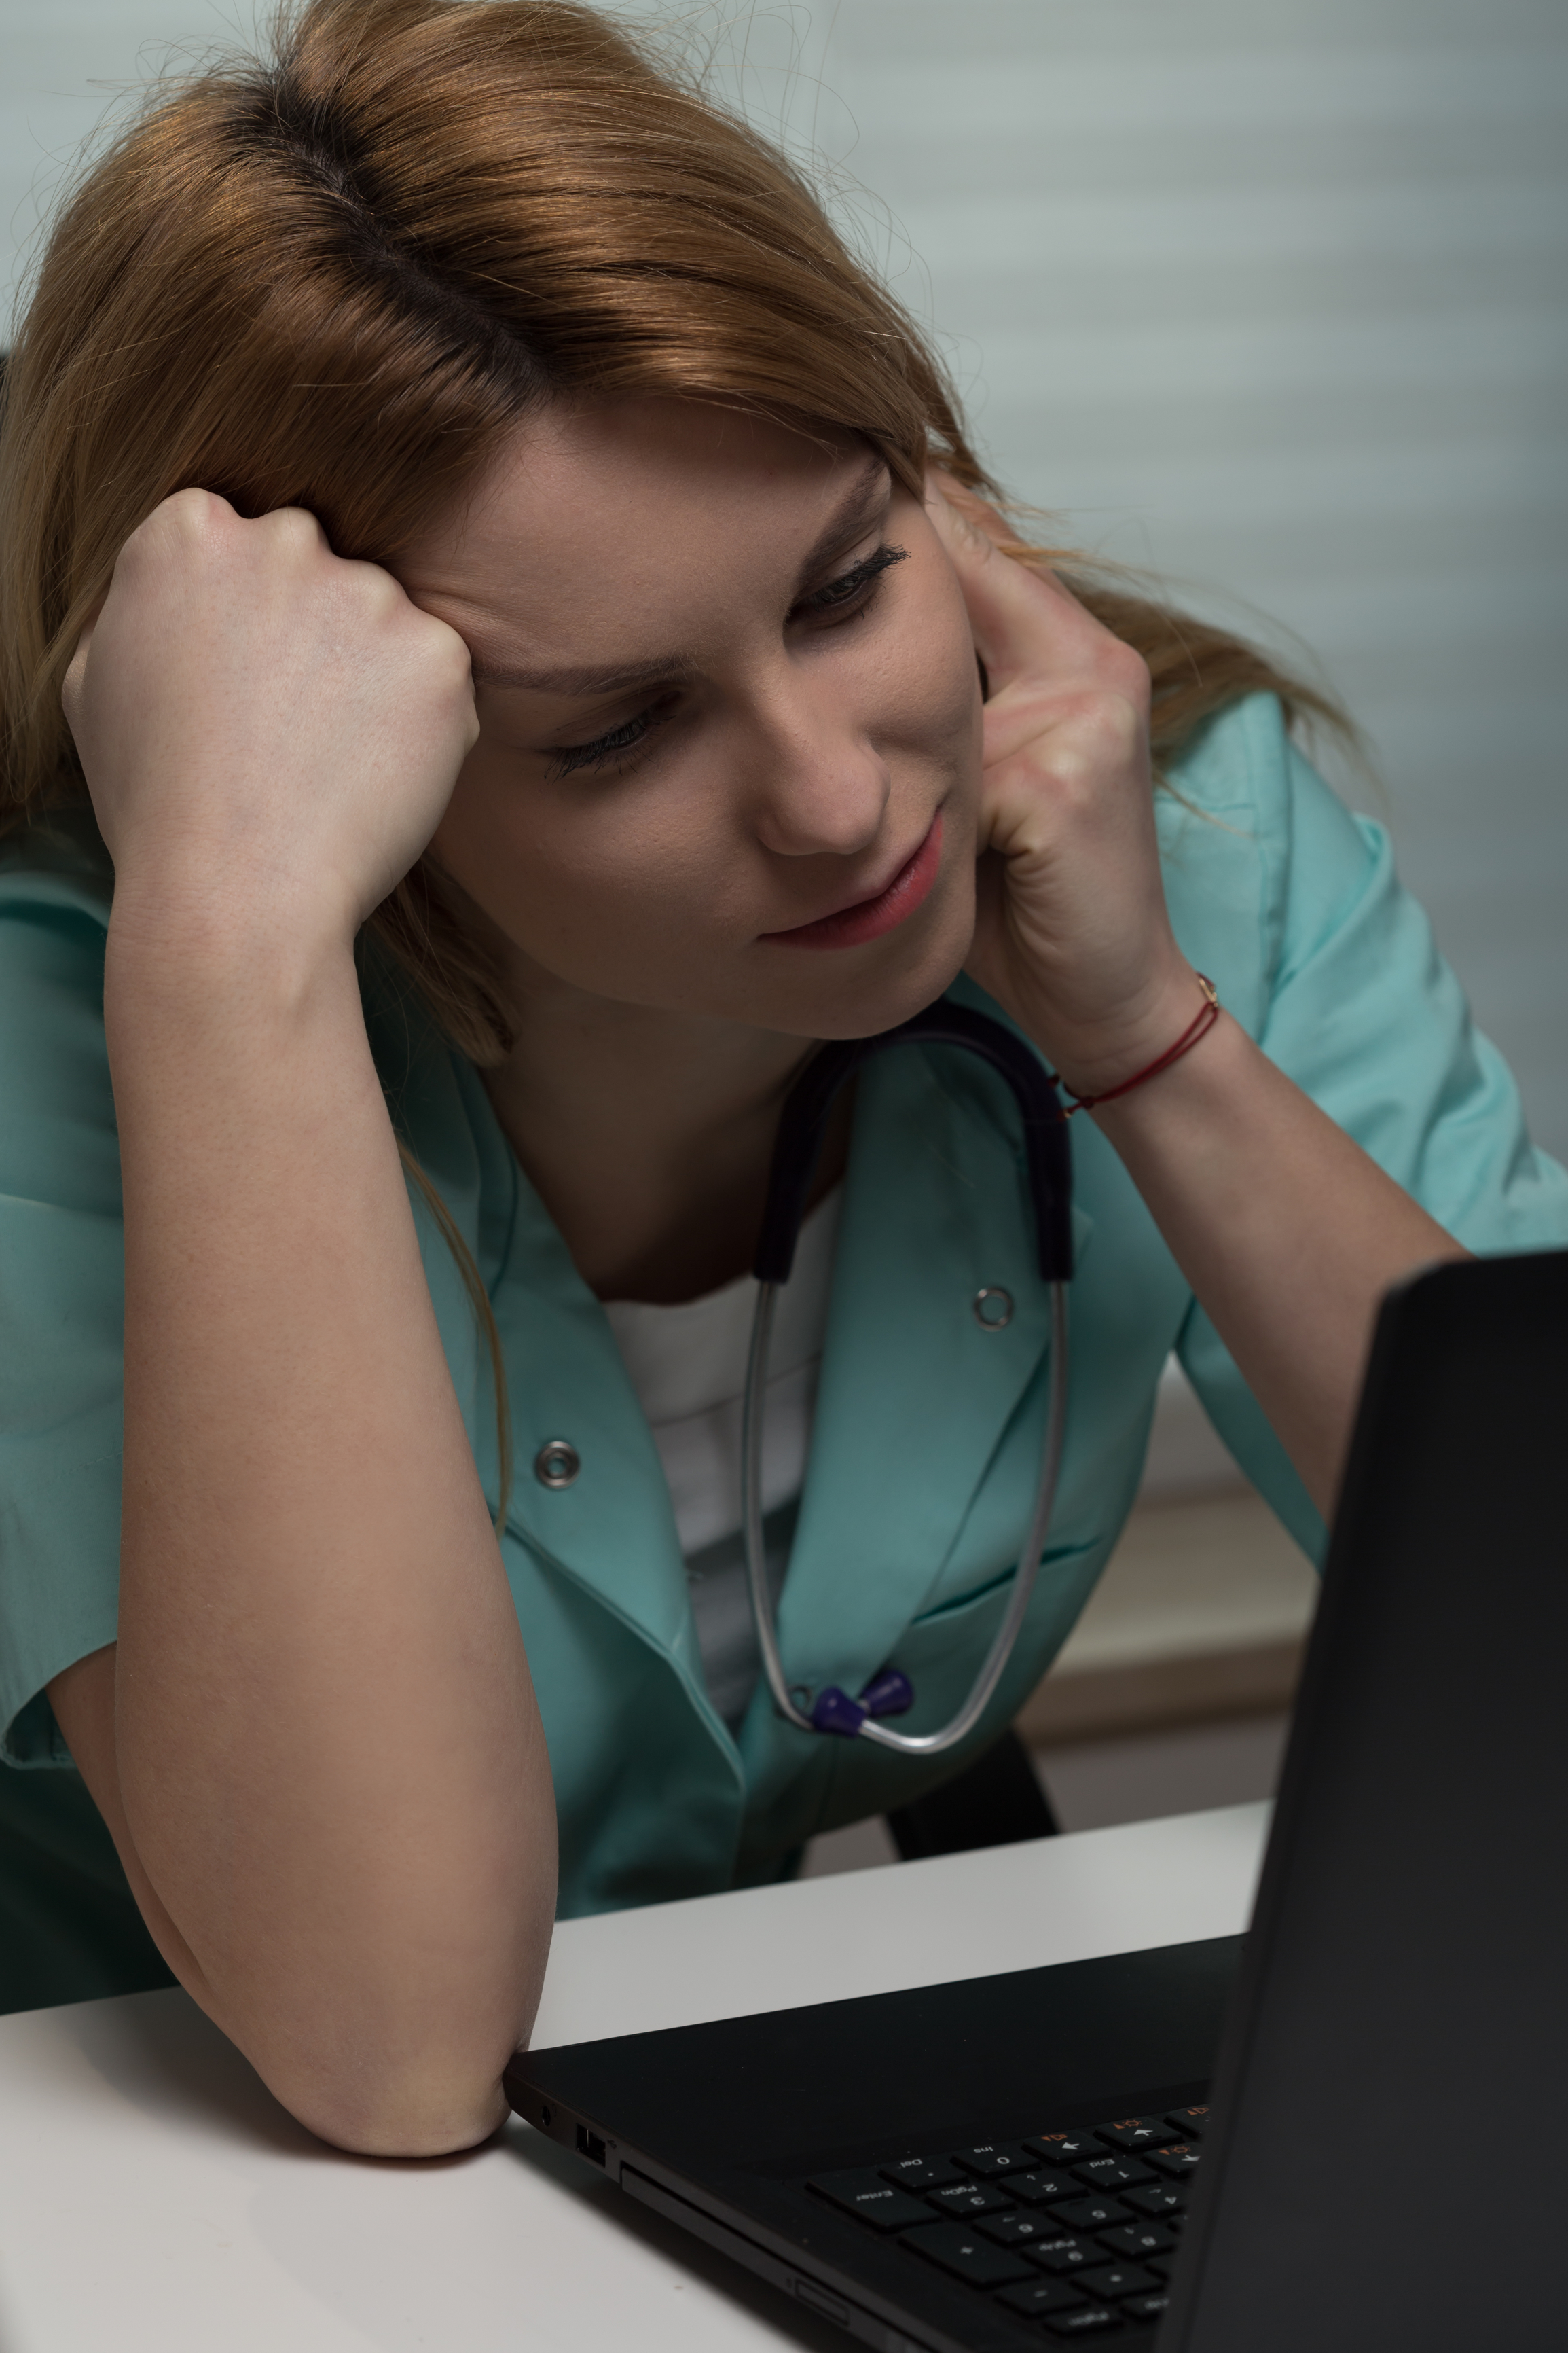 How Many Medical Students Struggle With Depression?